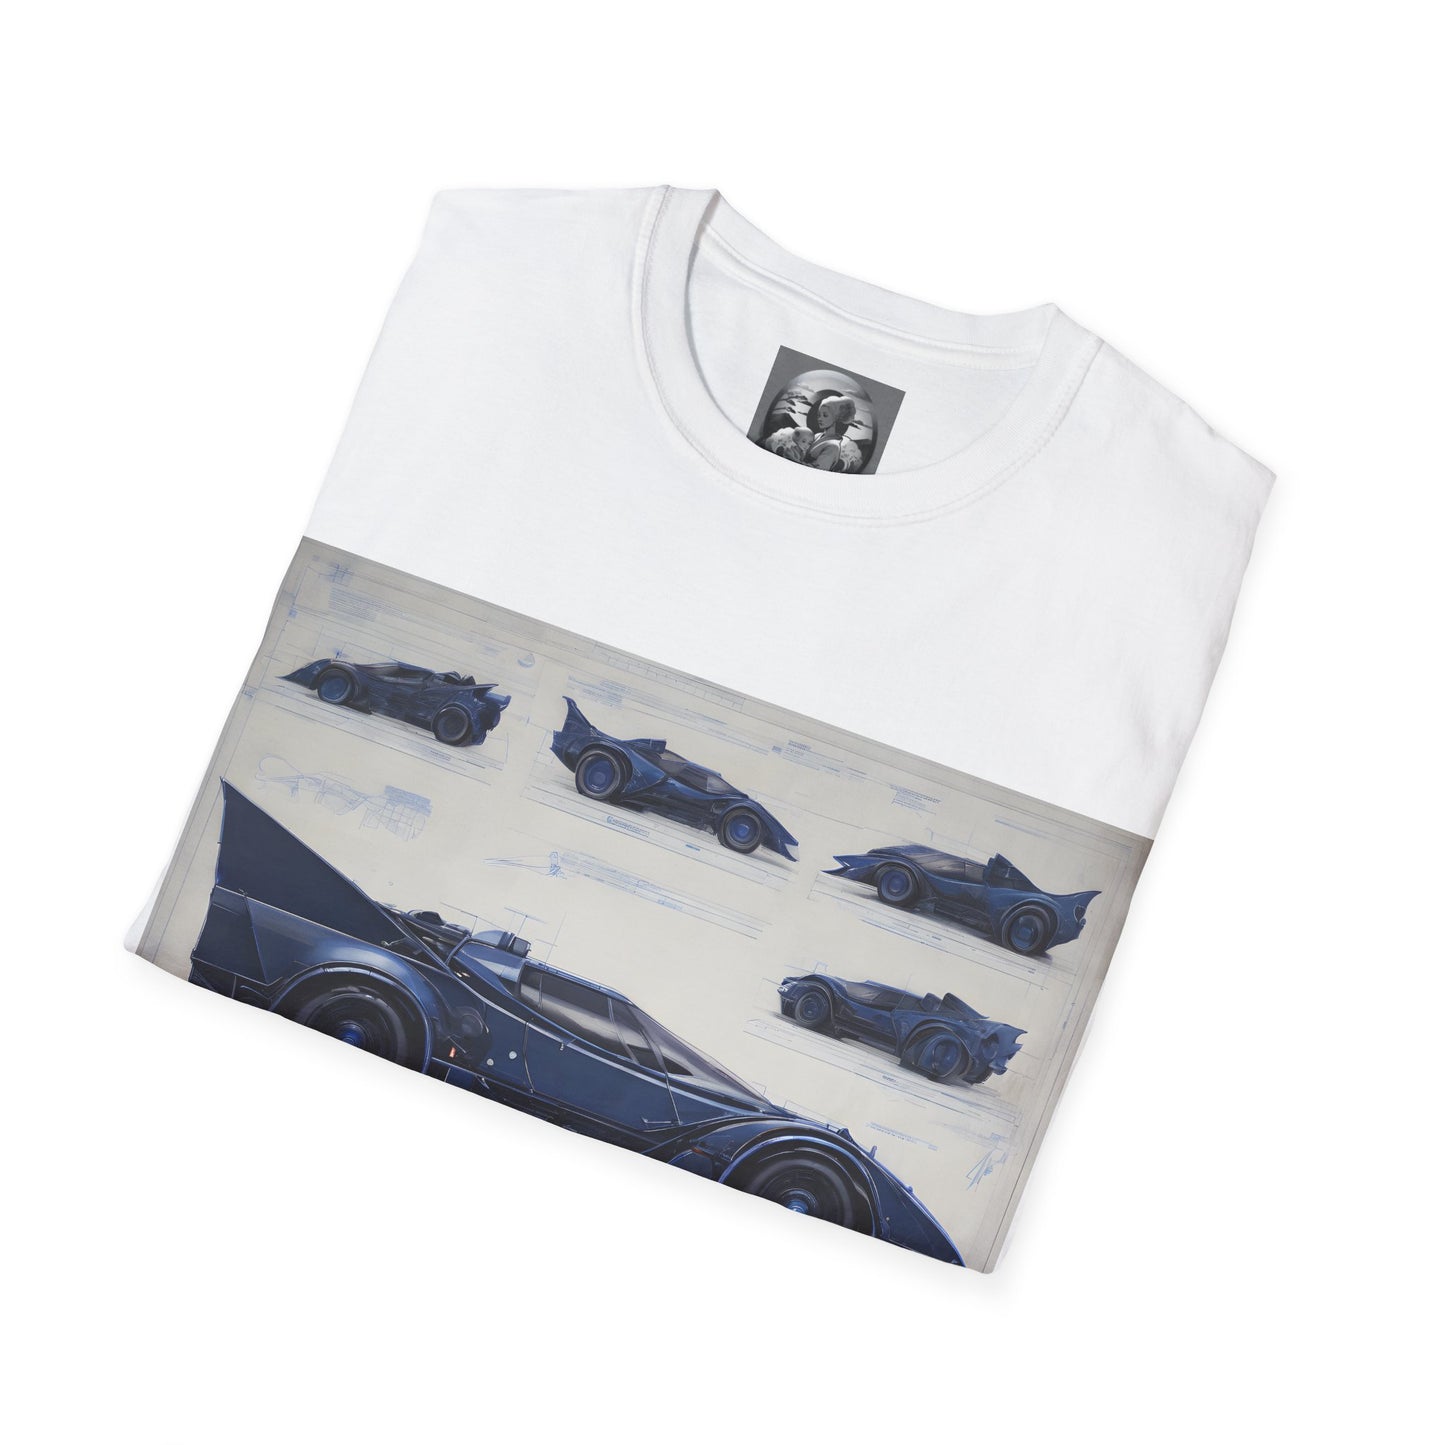 "Automobiliá de Chiroptera" Single Print Unisex Softstyle T-Shirt